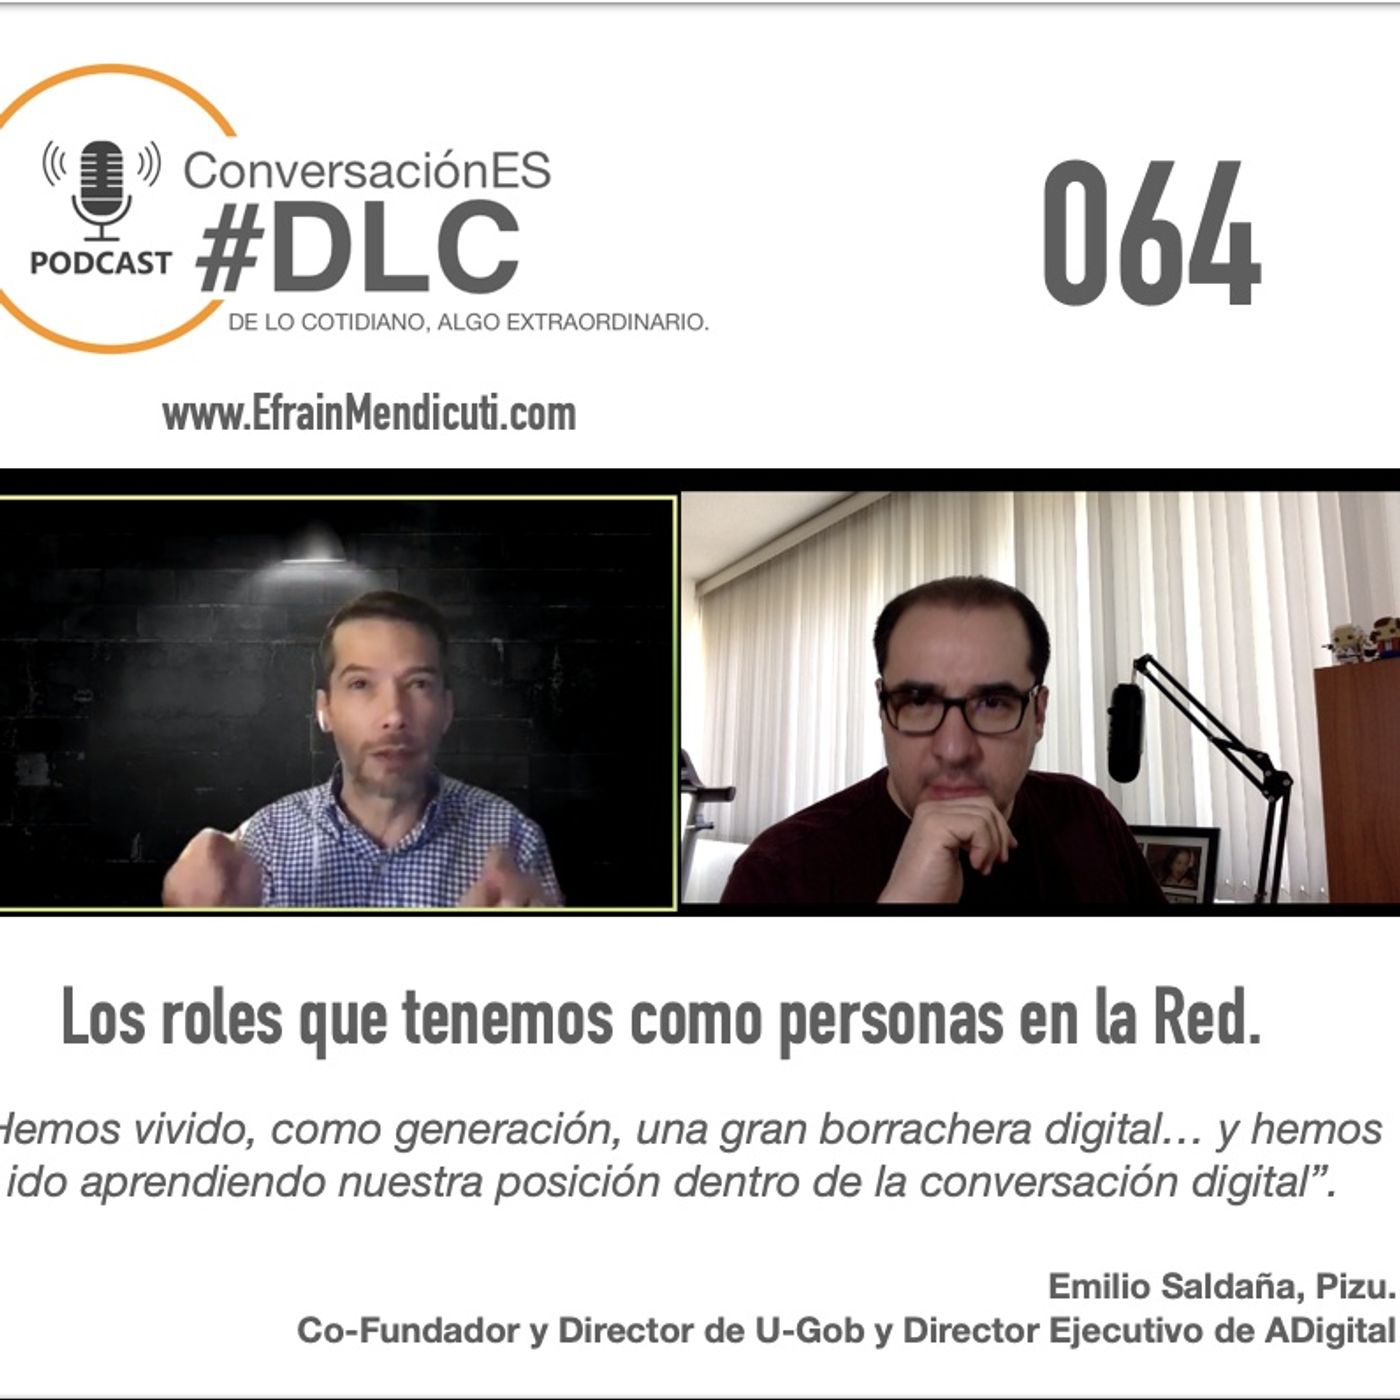 Episodio 064 - ConversaciónES #DLC con Emilio Saldaña, Pizu.